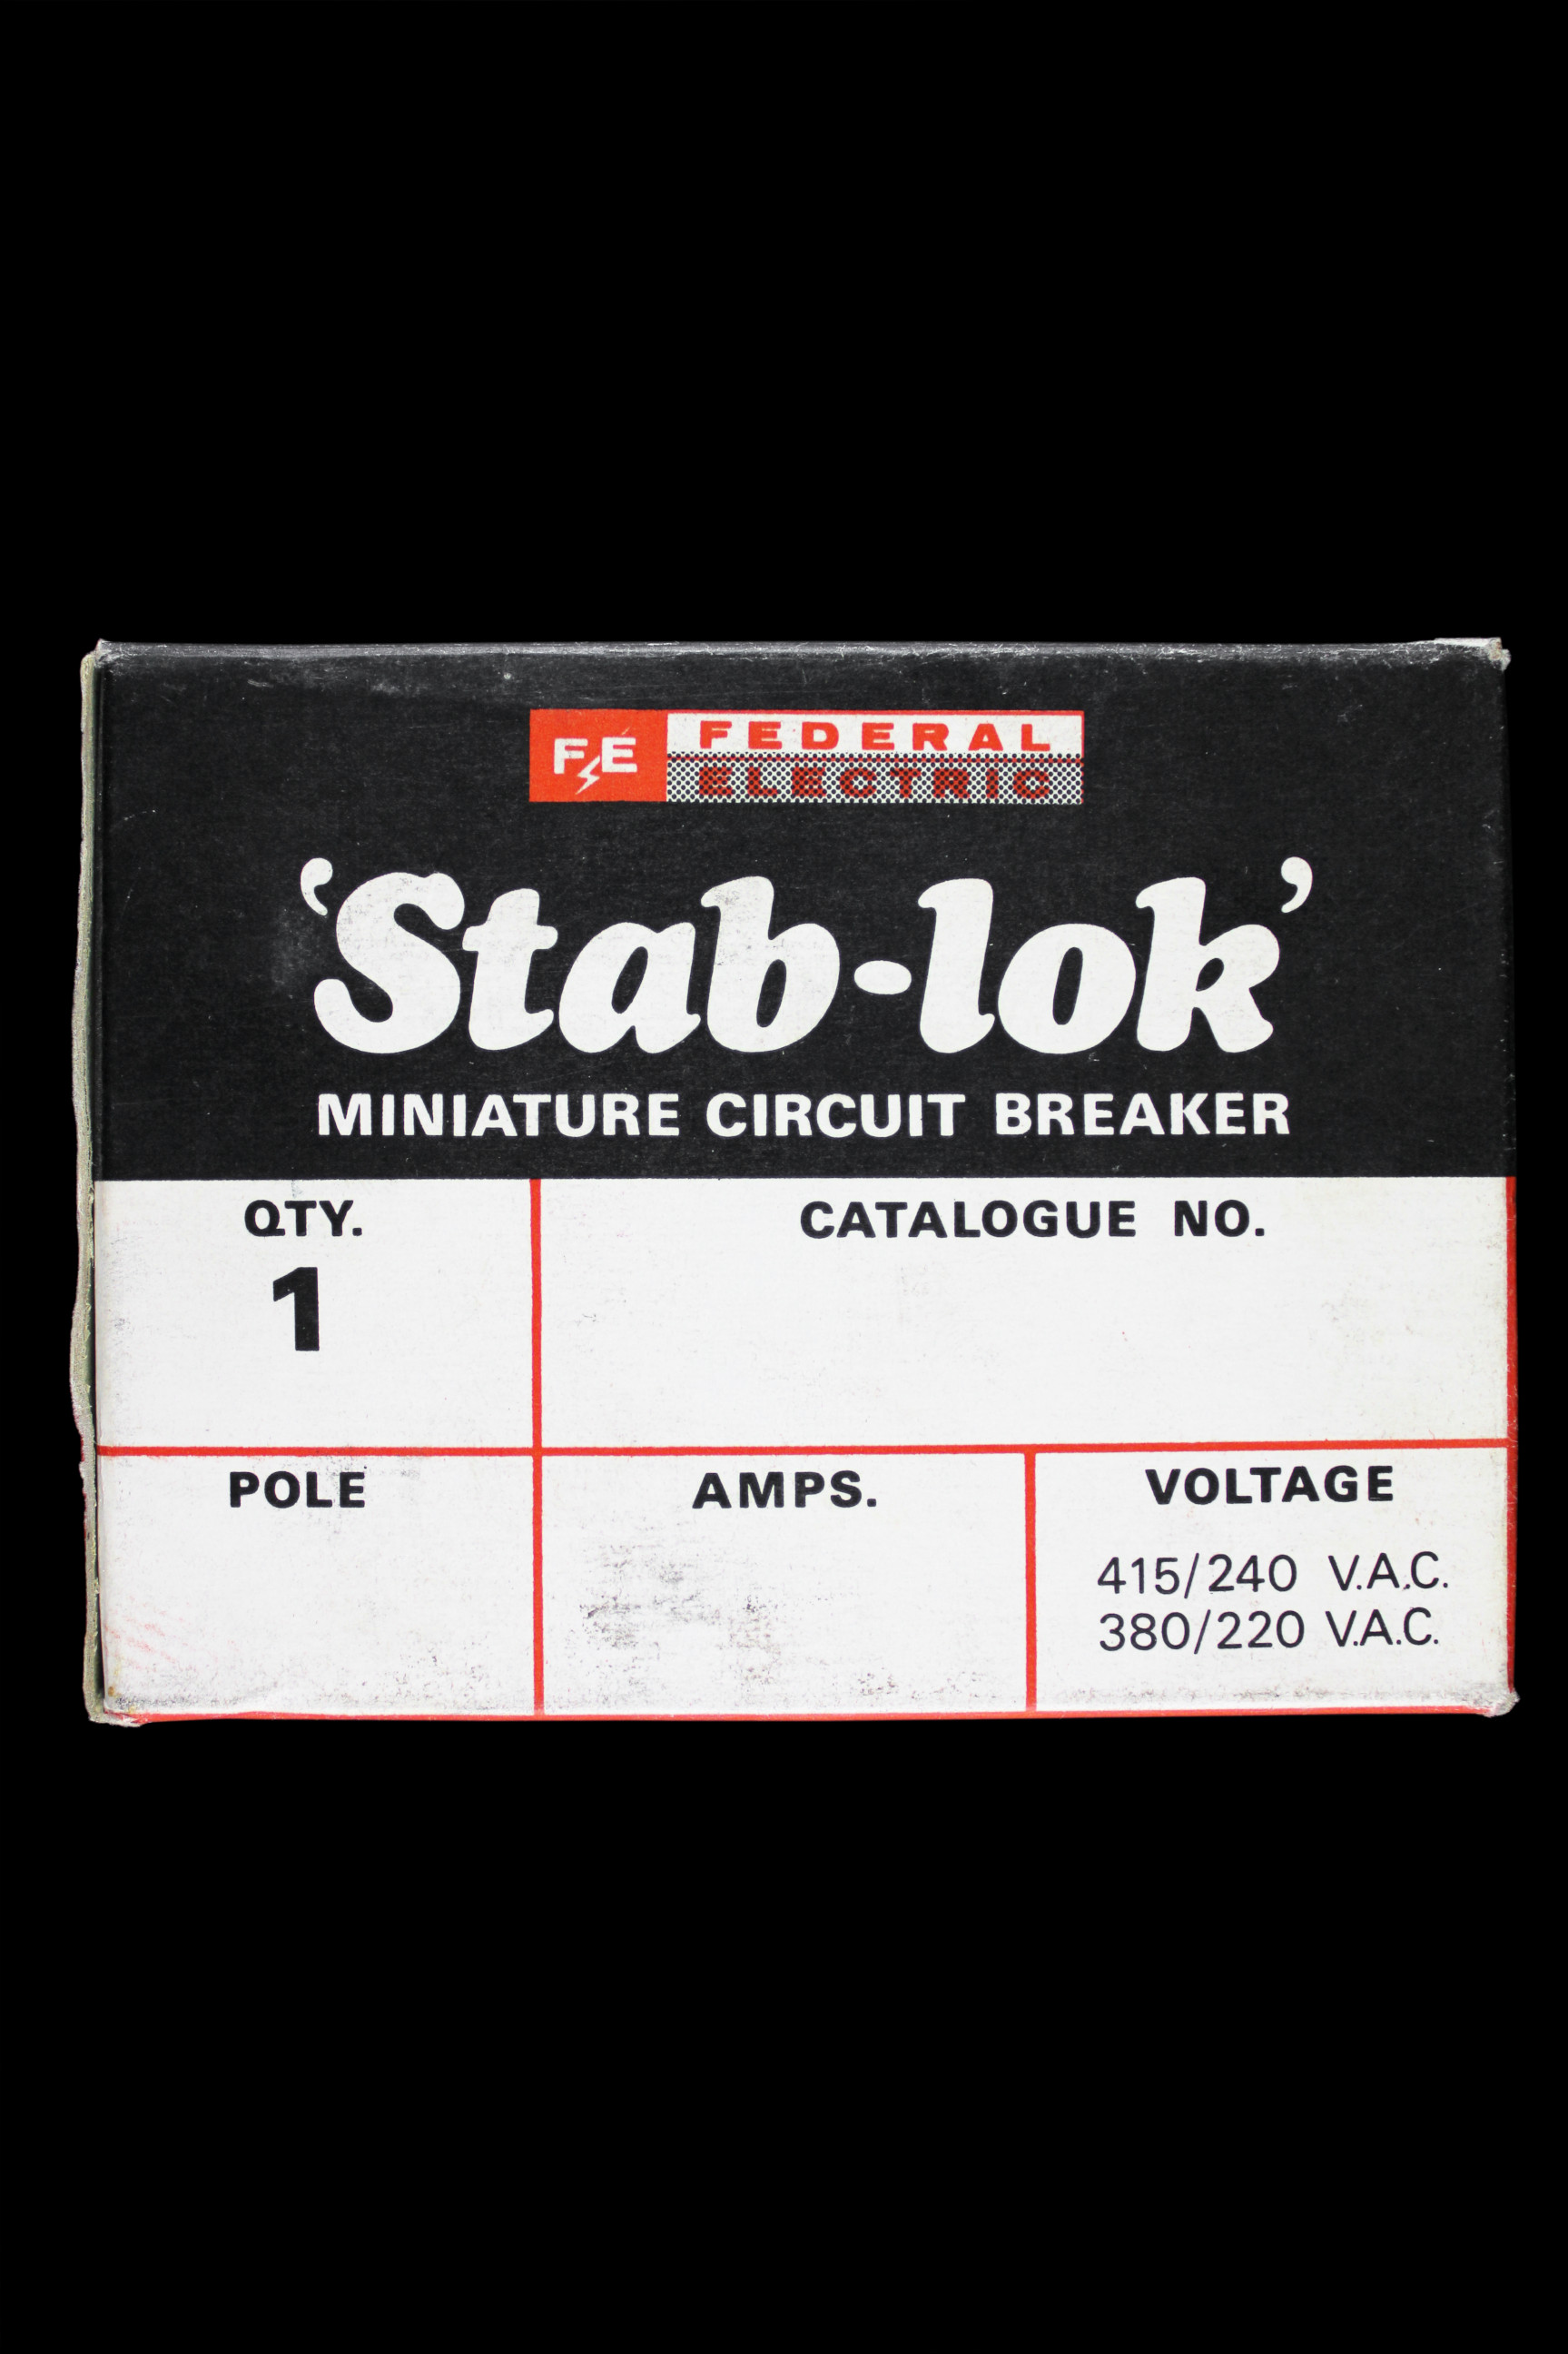 FEDERAL 10 AMP DOUBLE POLE MCB CIRCUIT BREAKER STAB-LOK WW